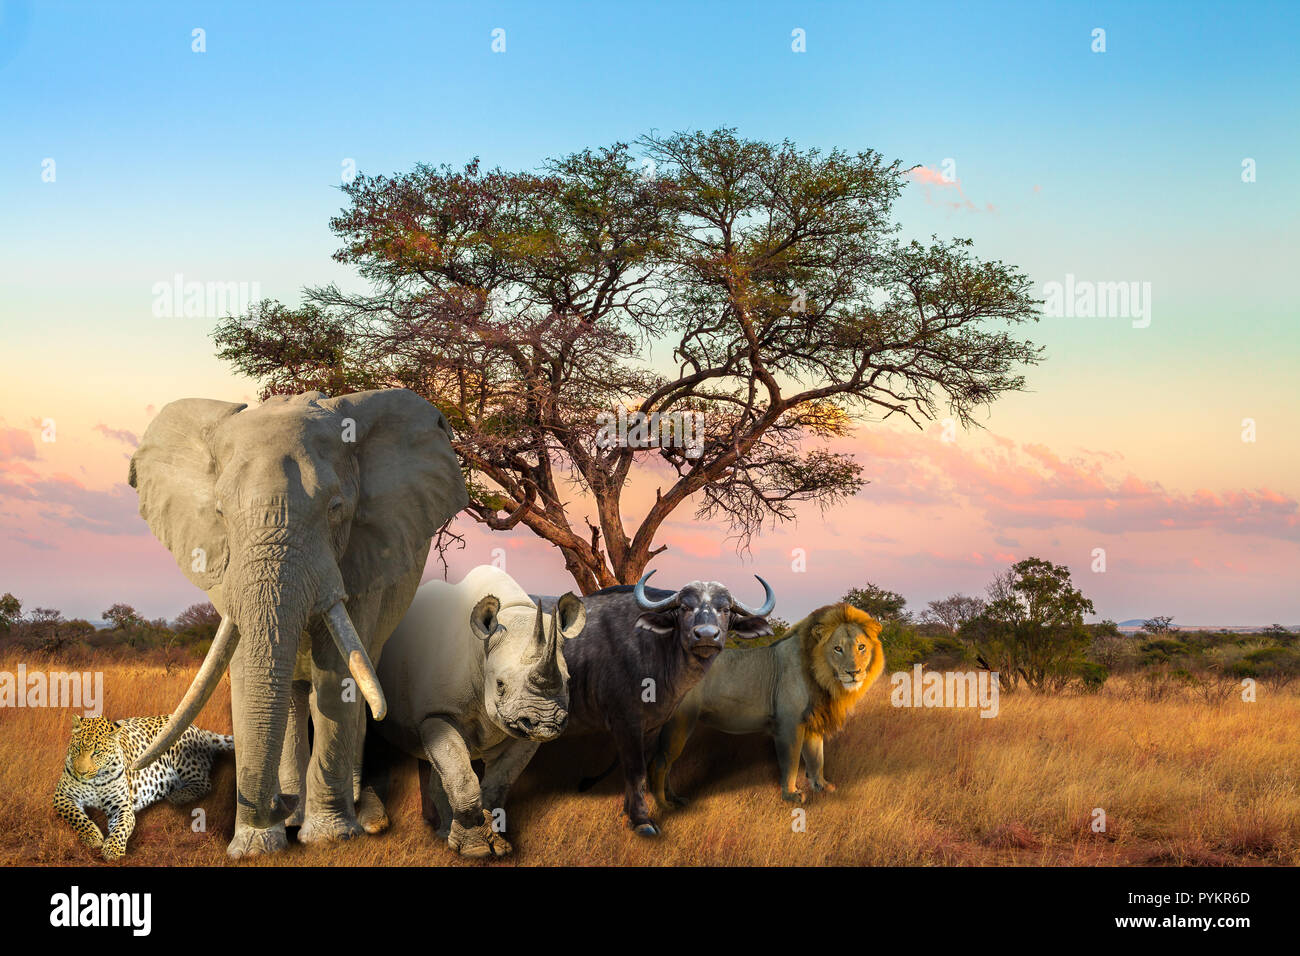 African Big Five: Leopard, Elephant, Black Rhino, Buffalo and Lion in savannah landscape at sunset light. Safari scene with wild animals. Wildlife background. Stock Photo